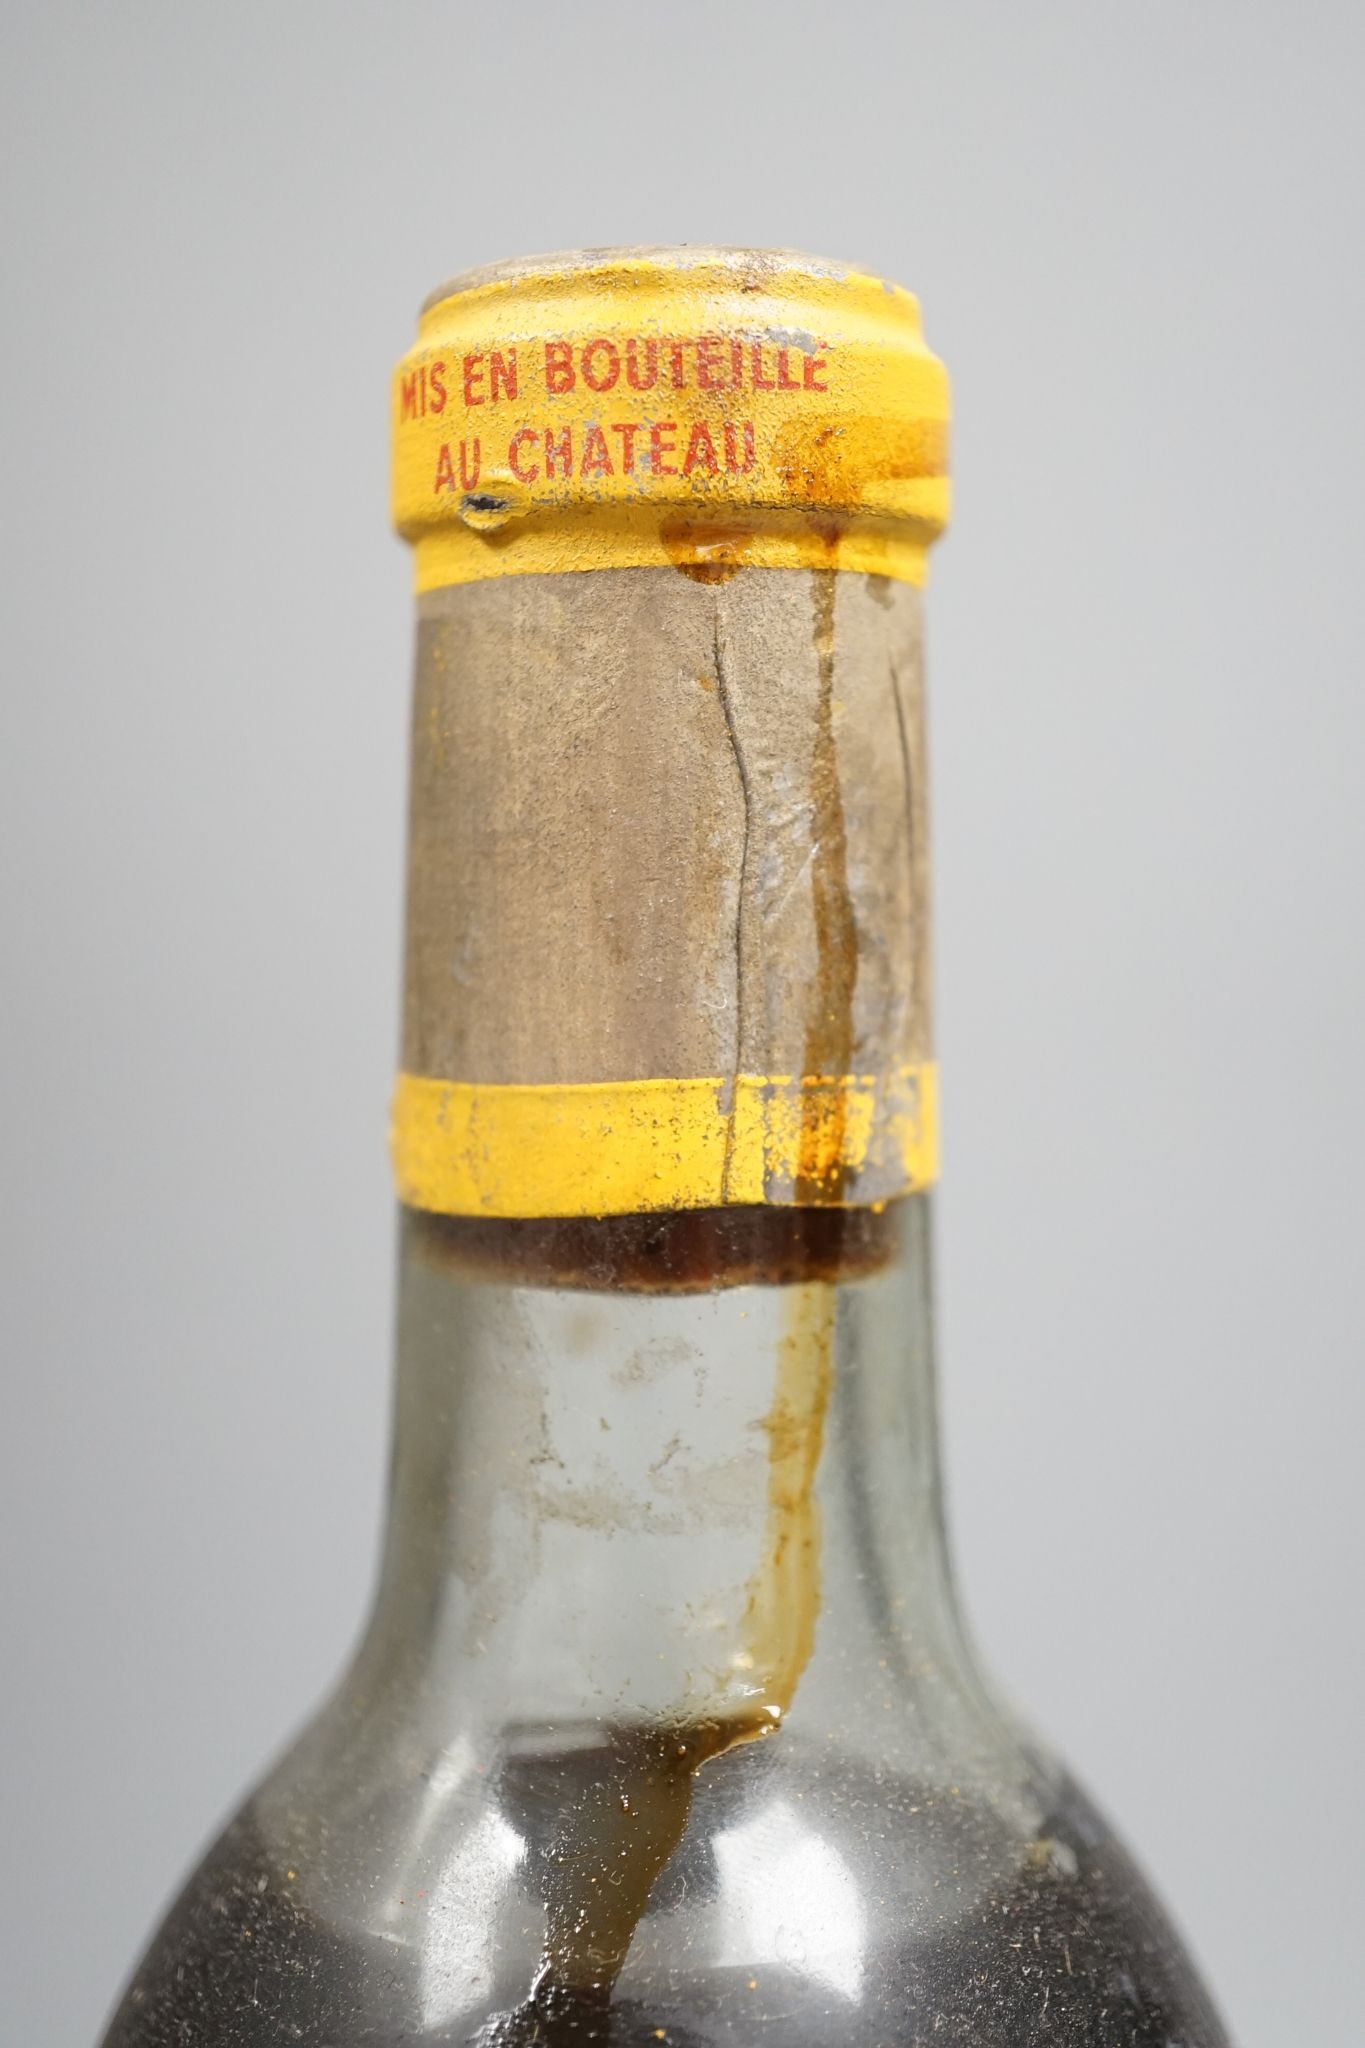 A bottle of Chateau d’Yquem, 1966